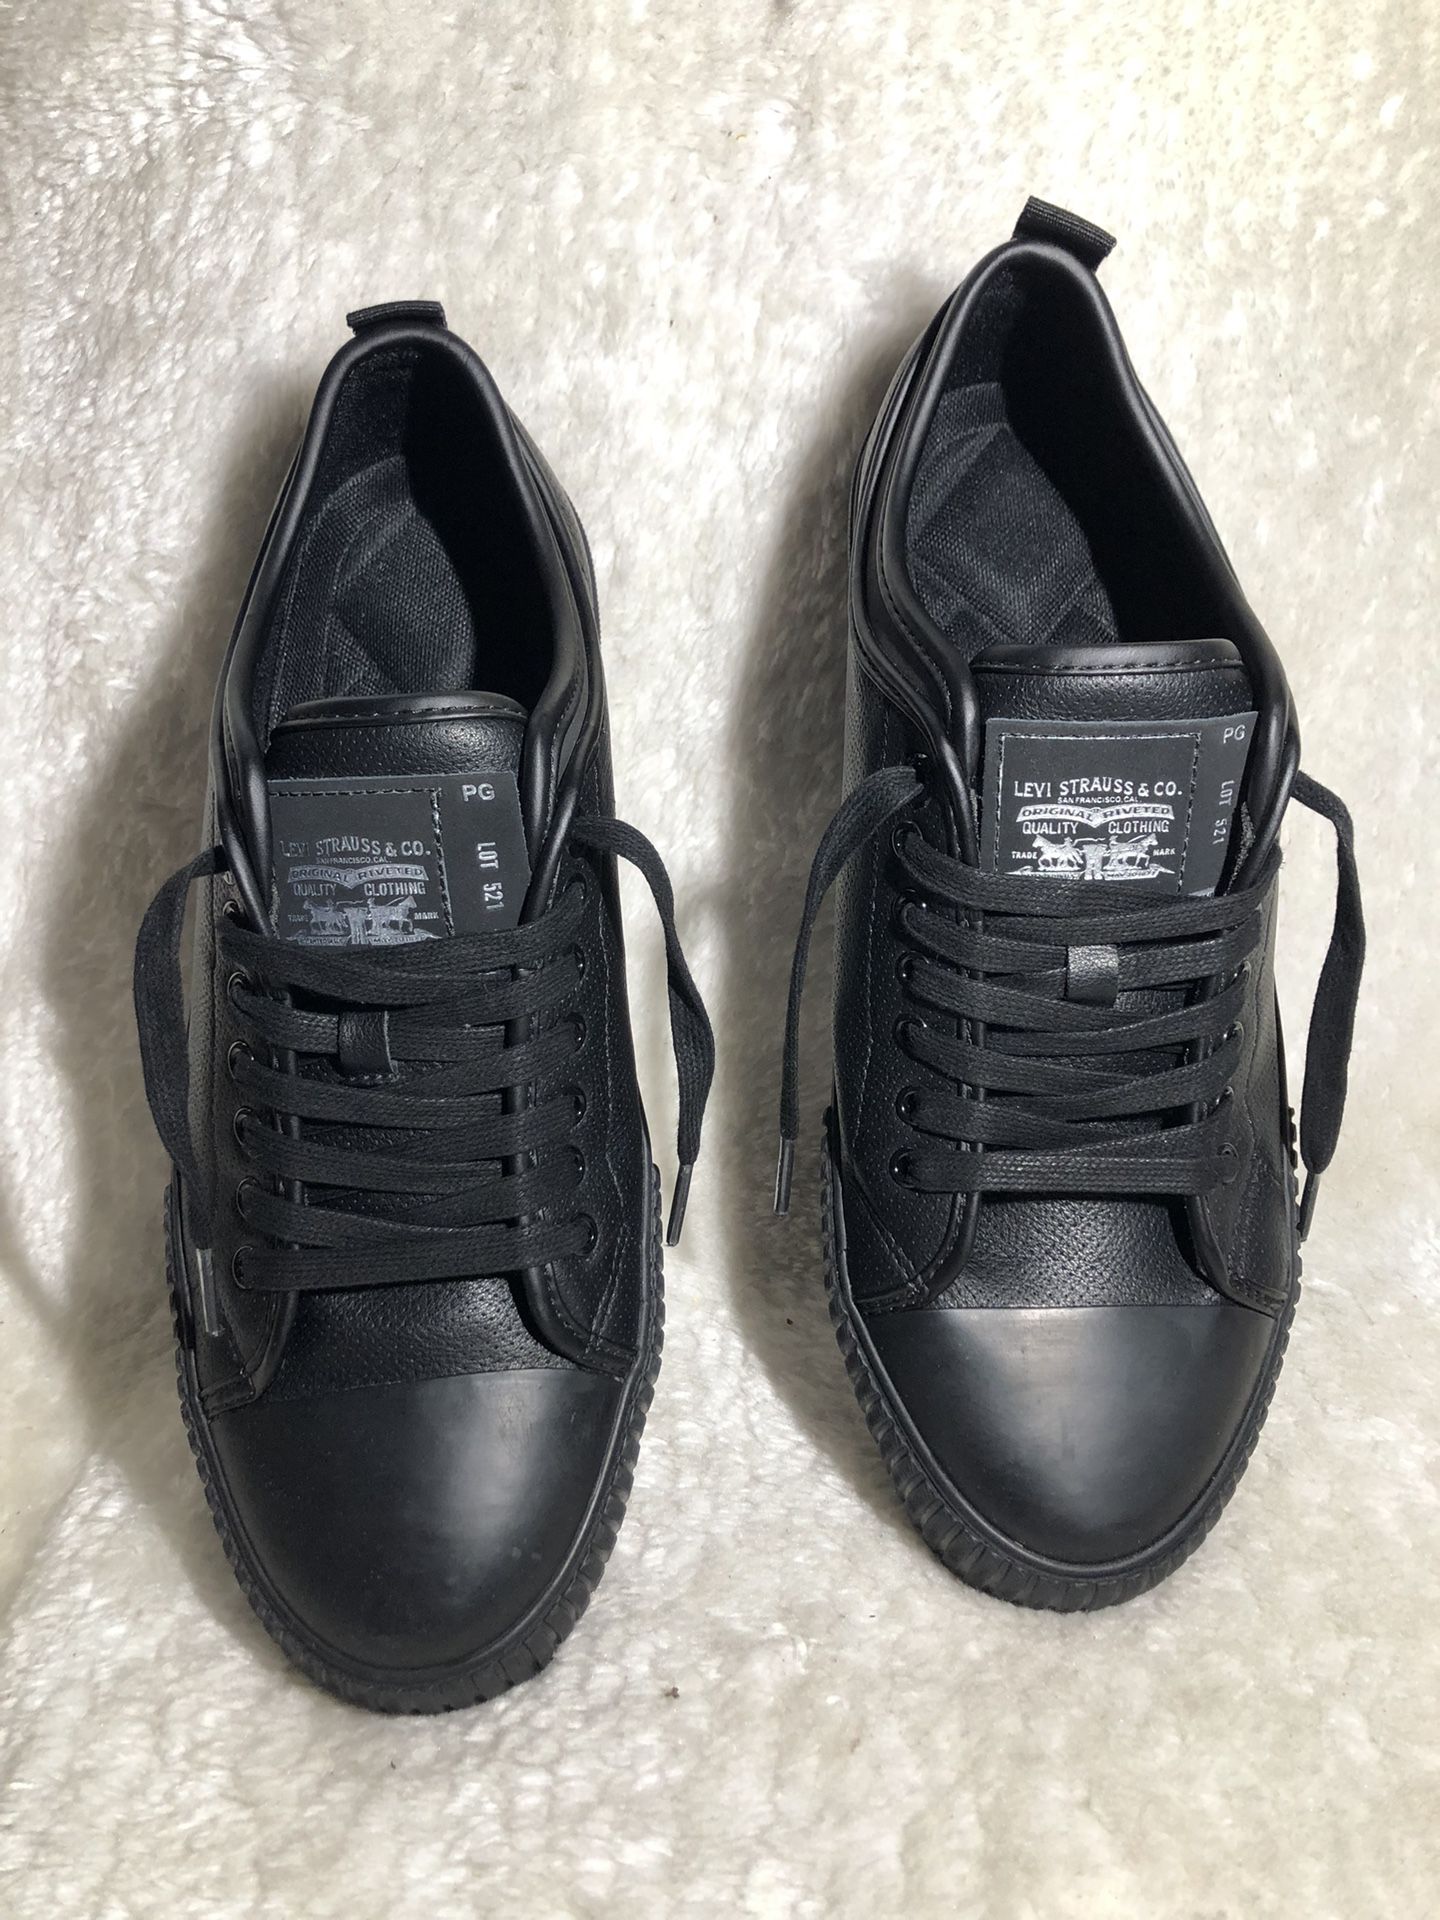 Levi Men’s Sneakers Size 10 